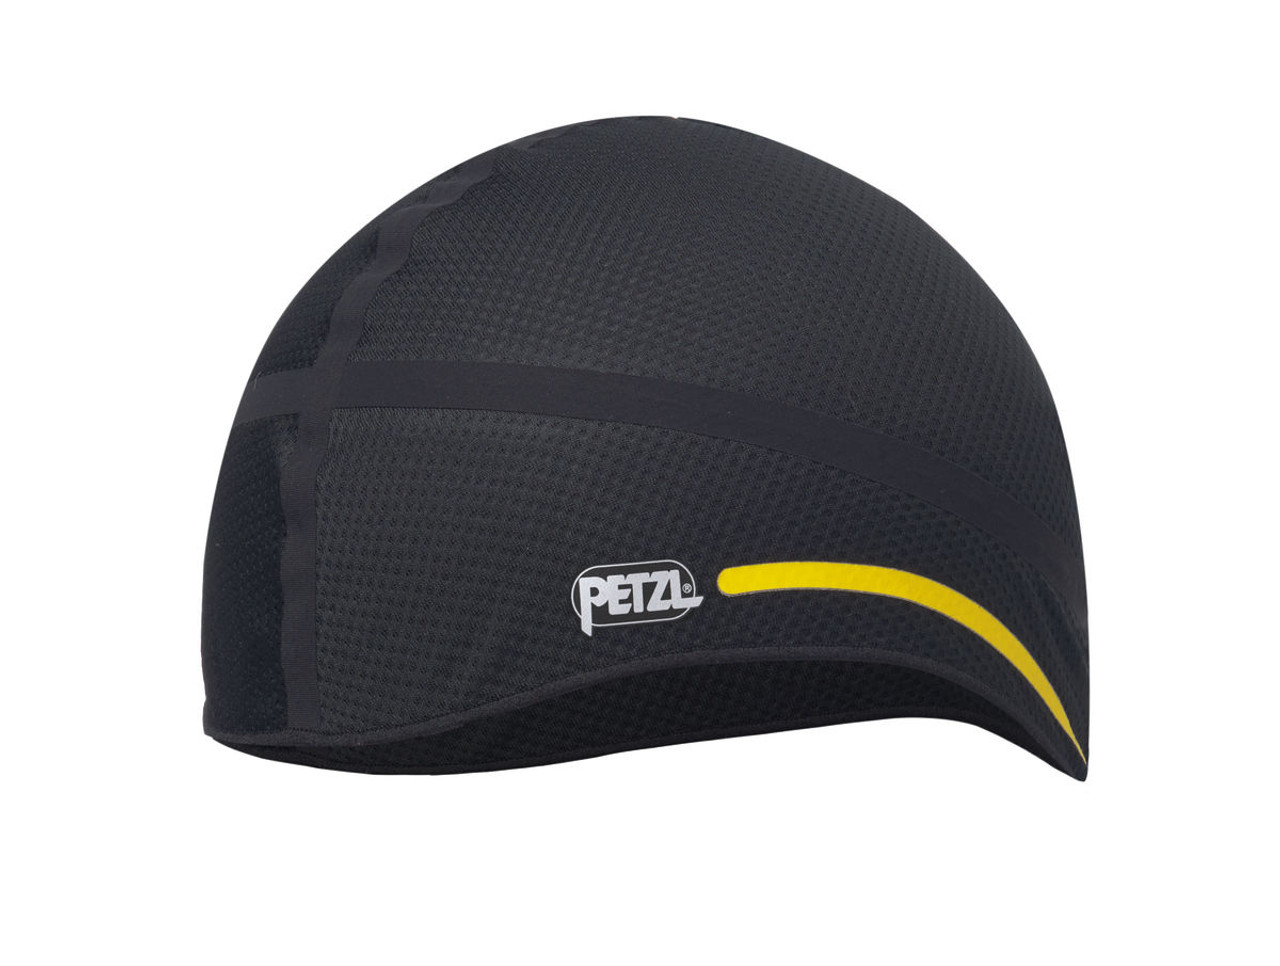 Petzl VERTEX A016AA00 Helmet Liner Cap, Multiple Size Values Available  Western Safety